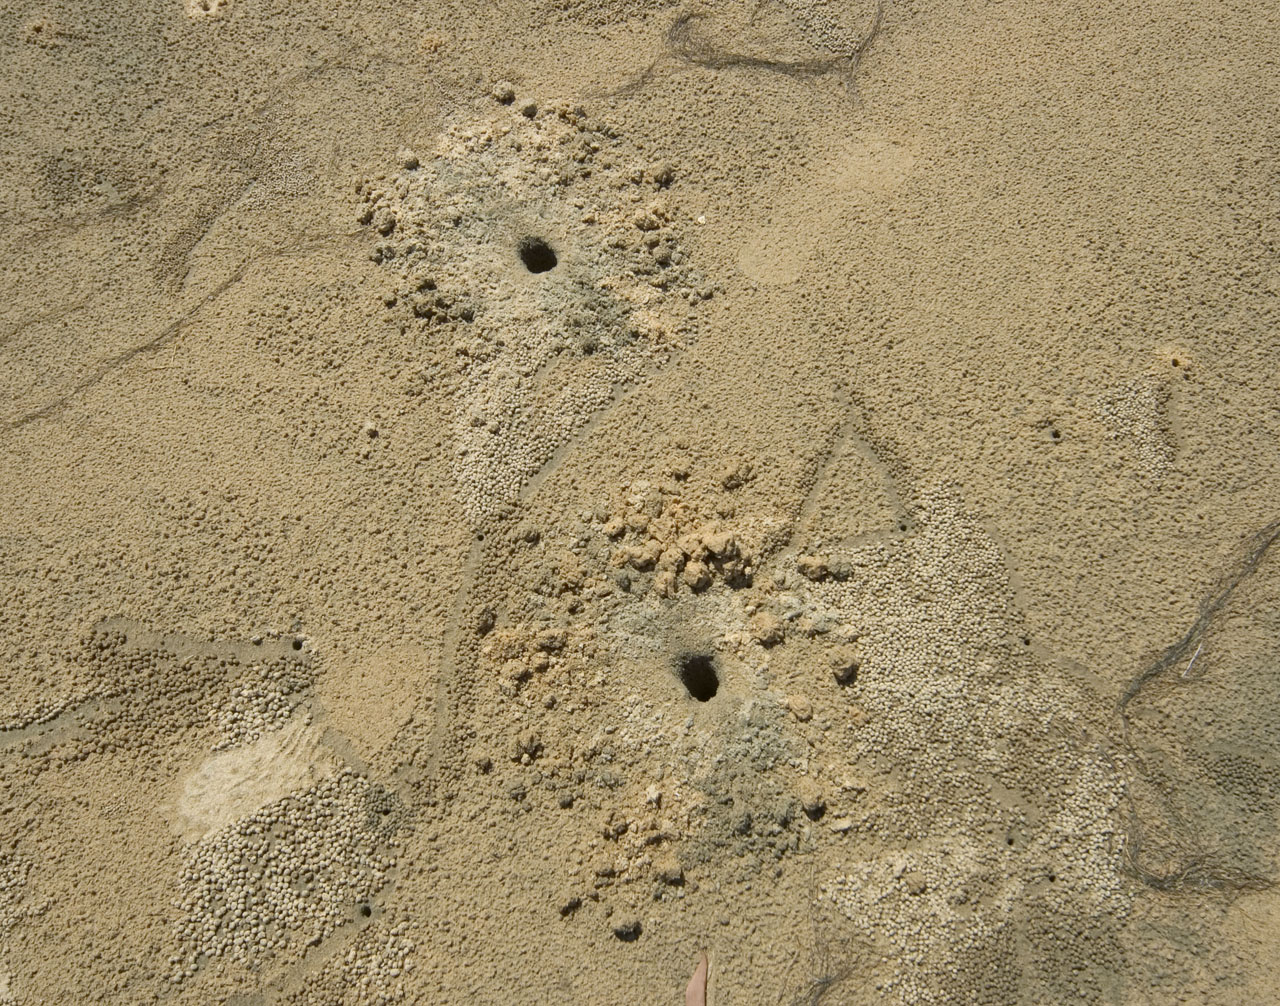 hinchinbrook  island sand crab burrows<p>_DSC6502